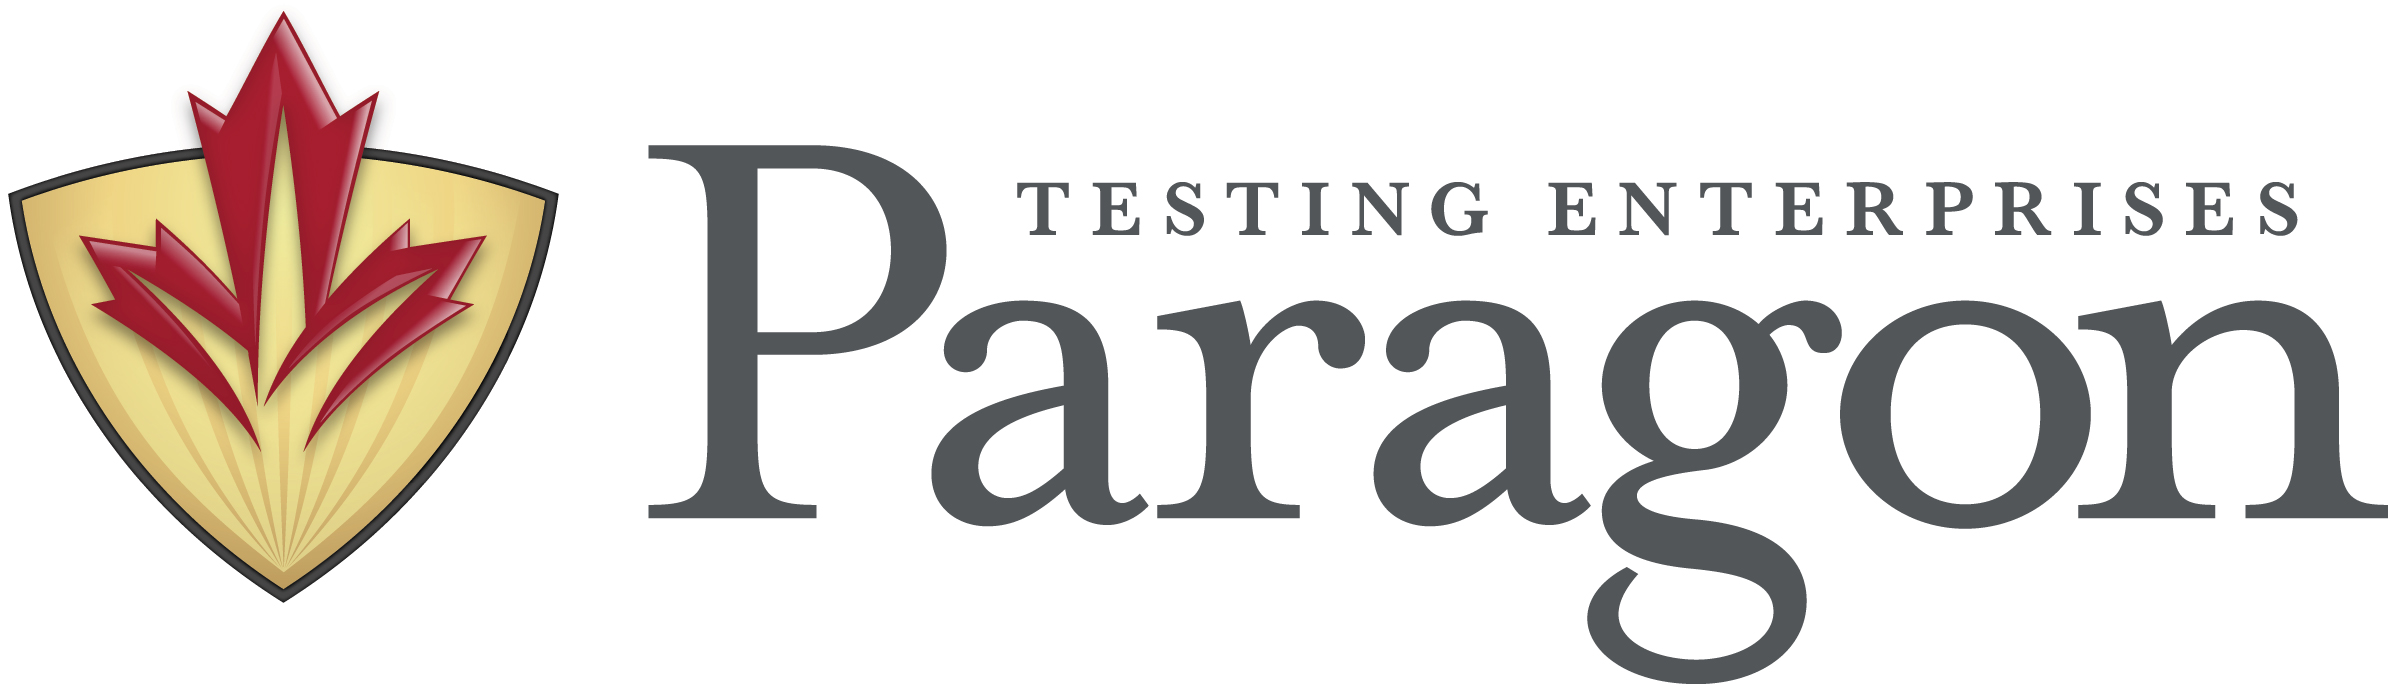 UBC - Agency Logos - Paragon Testing Enterprises